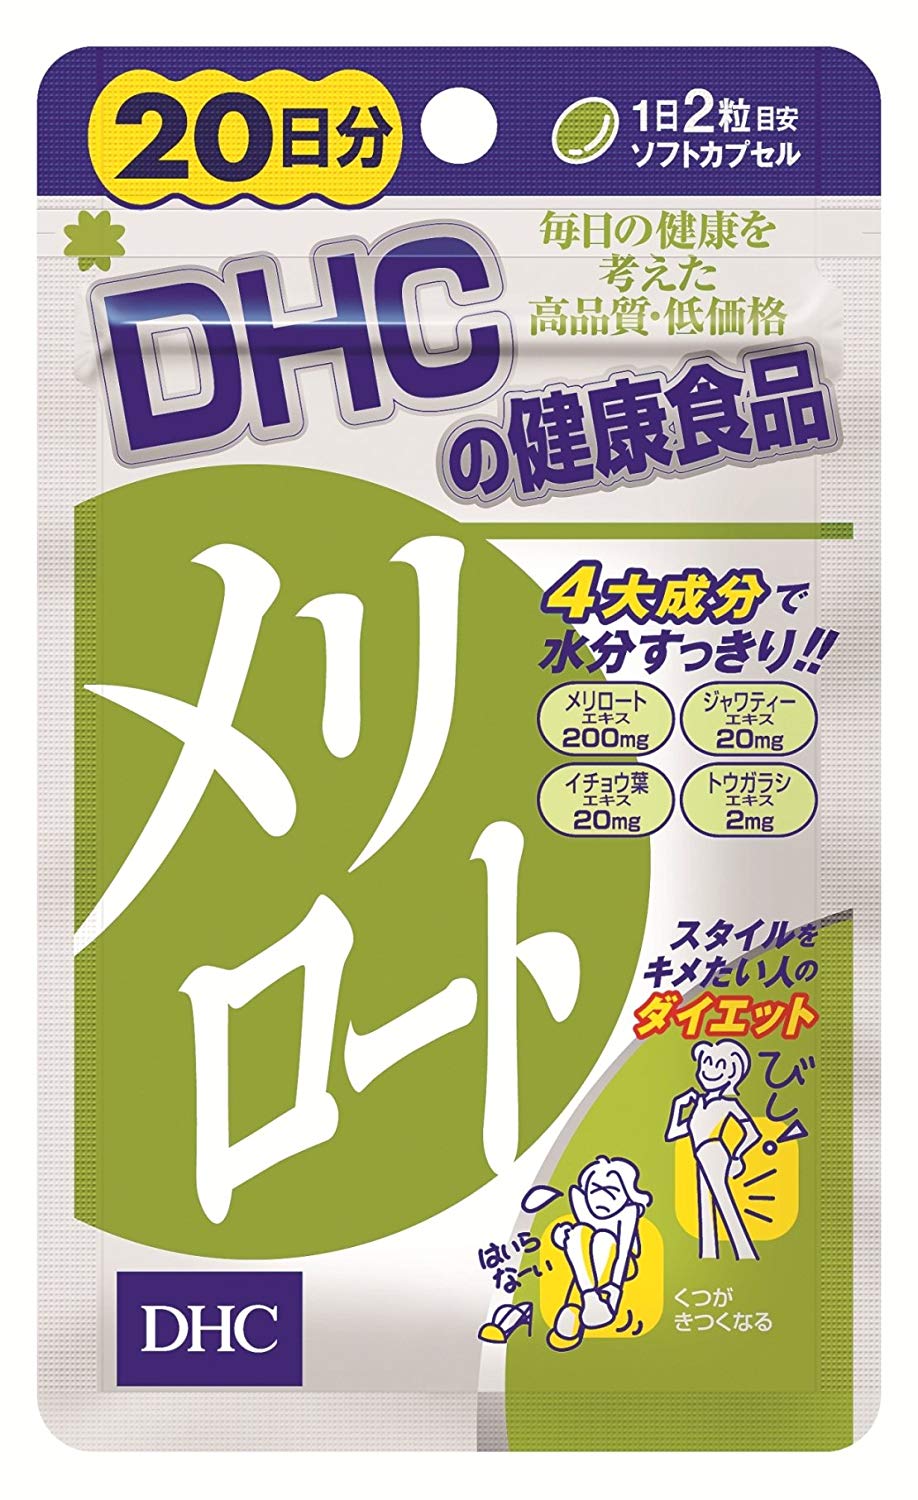 DHC Meliot Diet Supplements 20 Days 40 Tablets